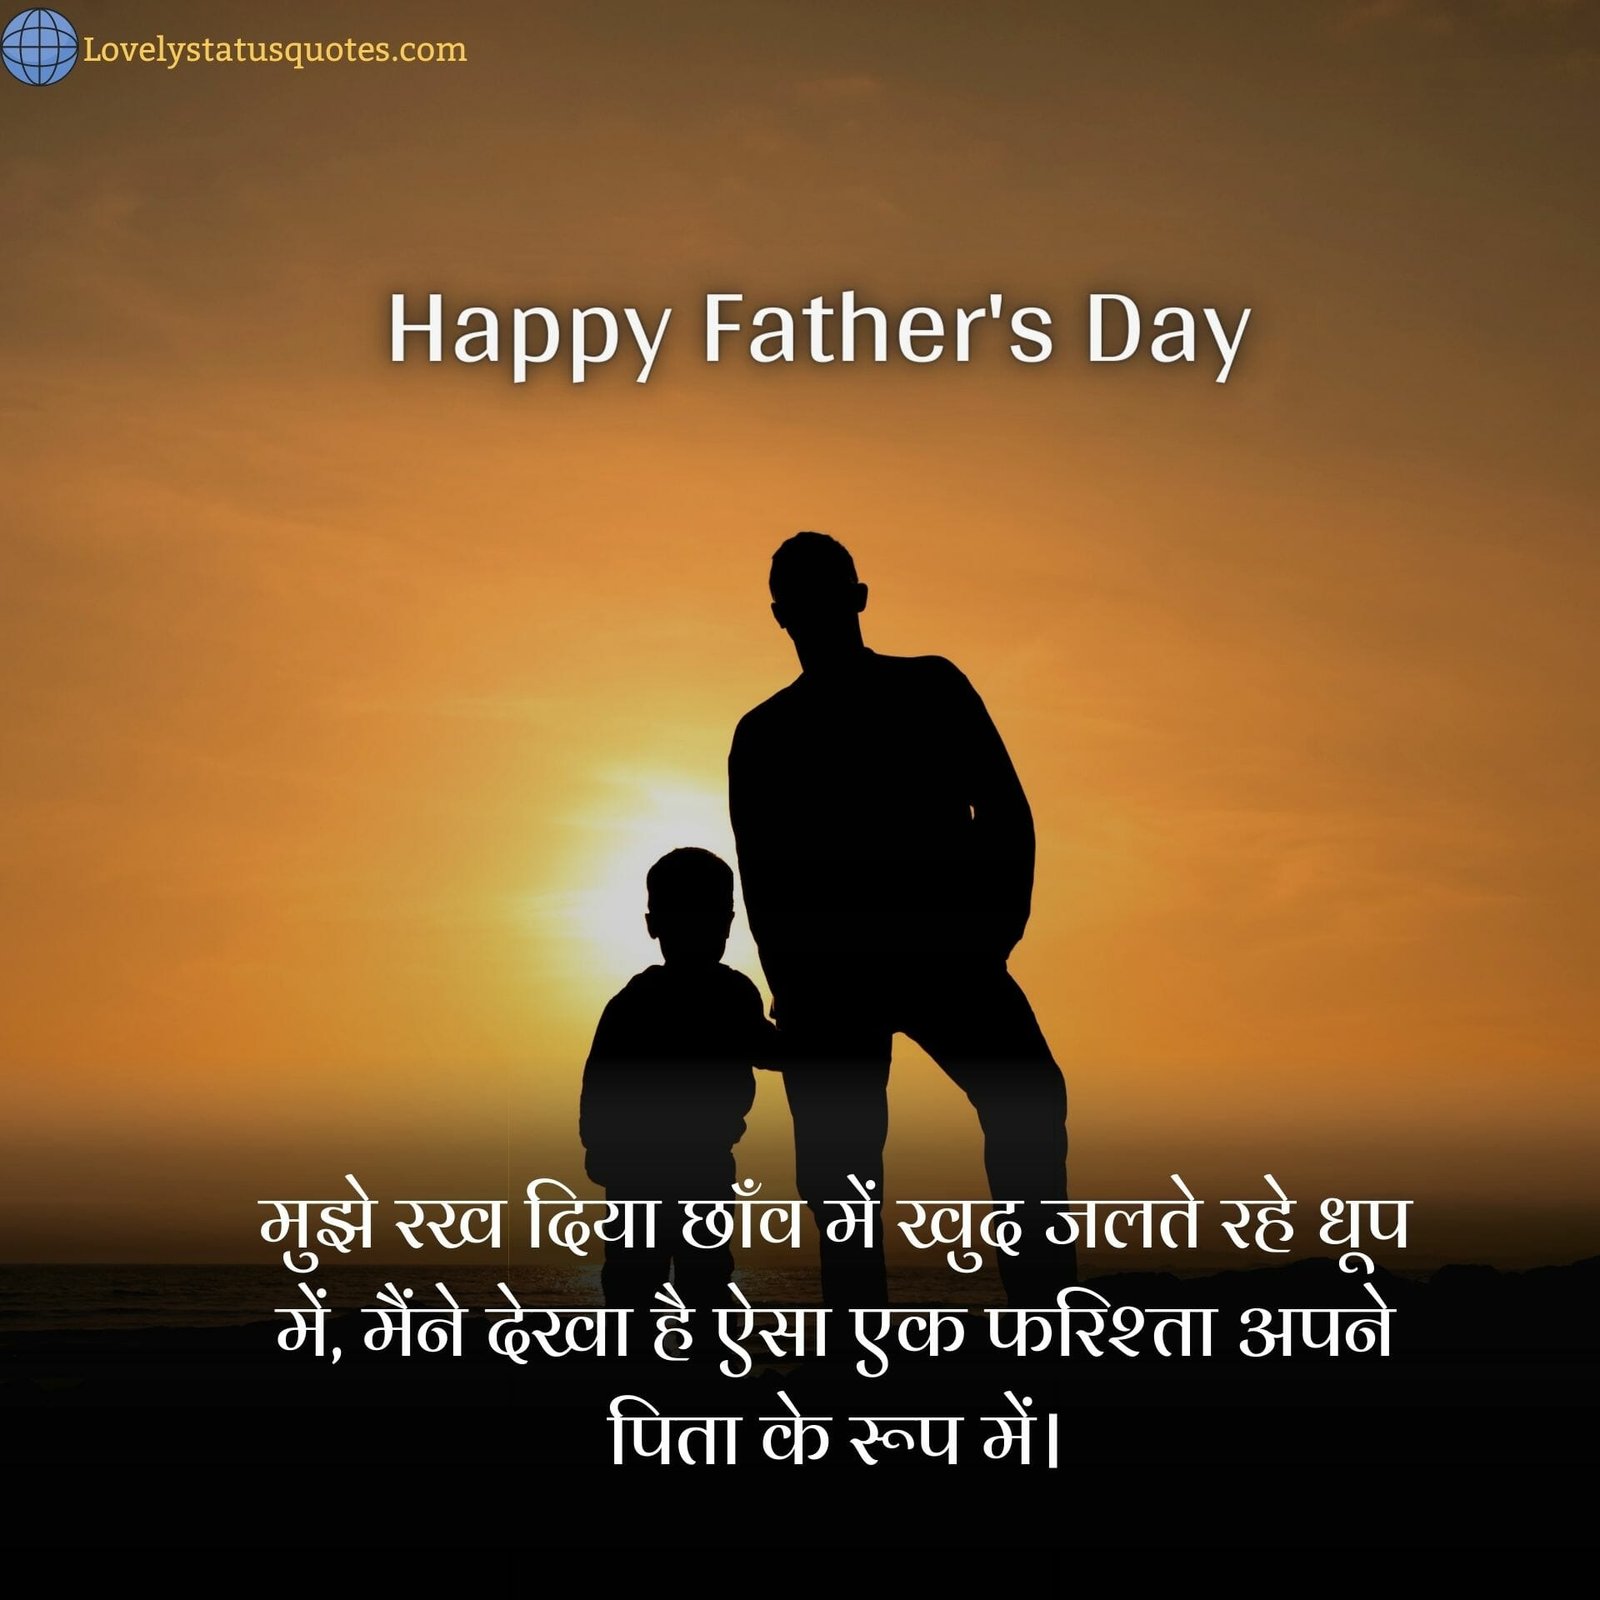 Fathers day status in hindi, papa day status in hindi